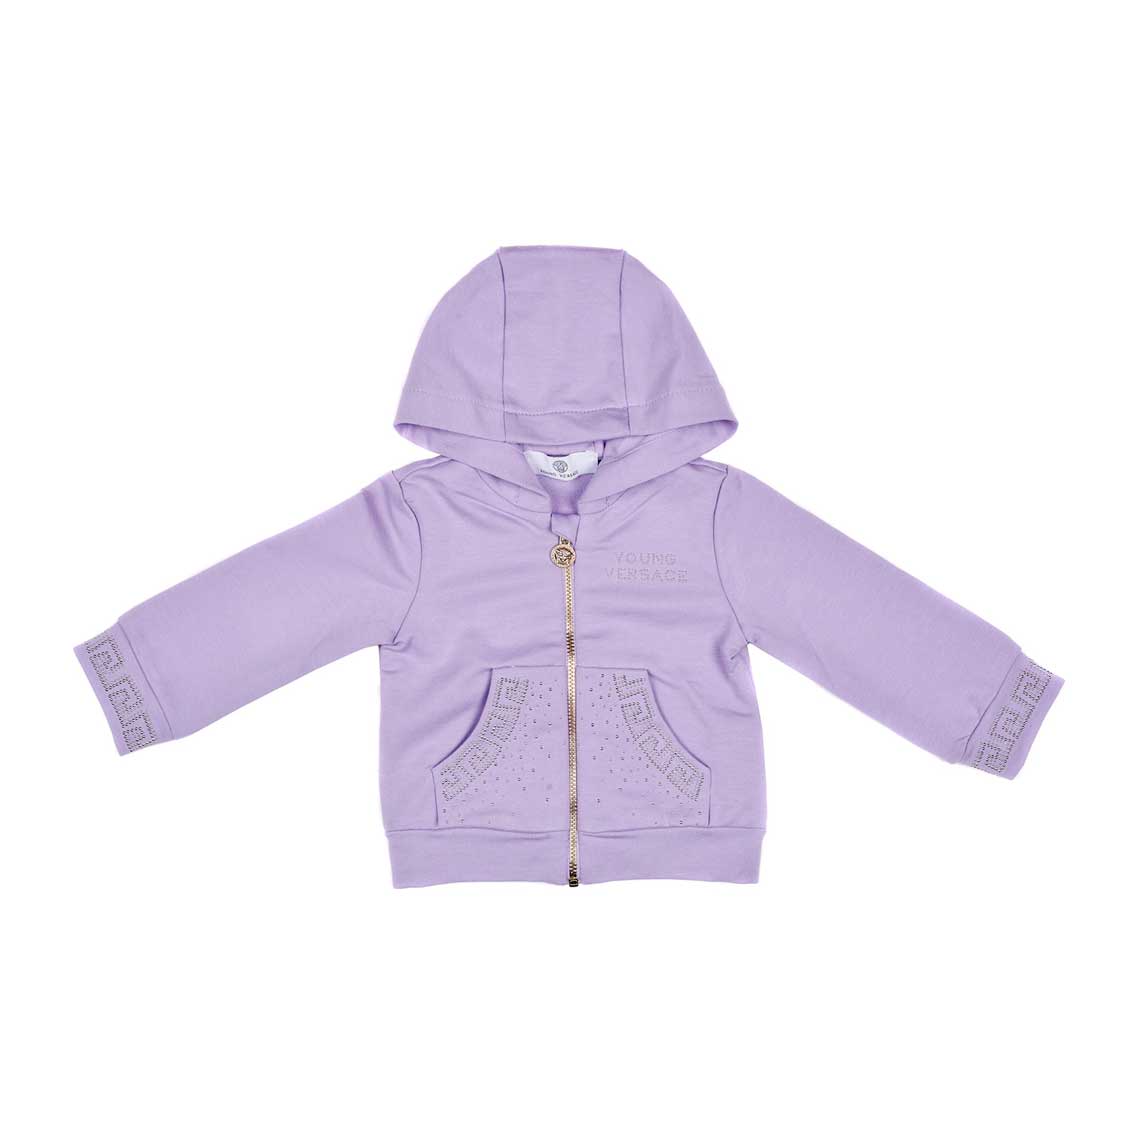 versace-purple-jacket-with-hood-48168-1